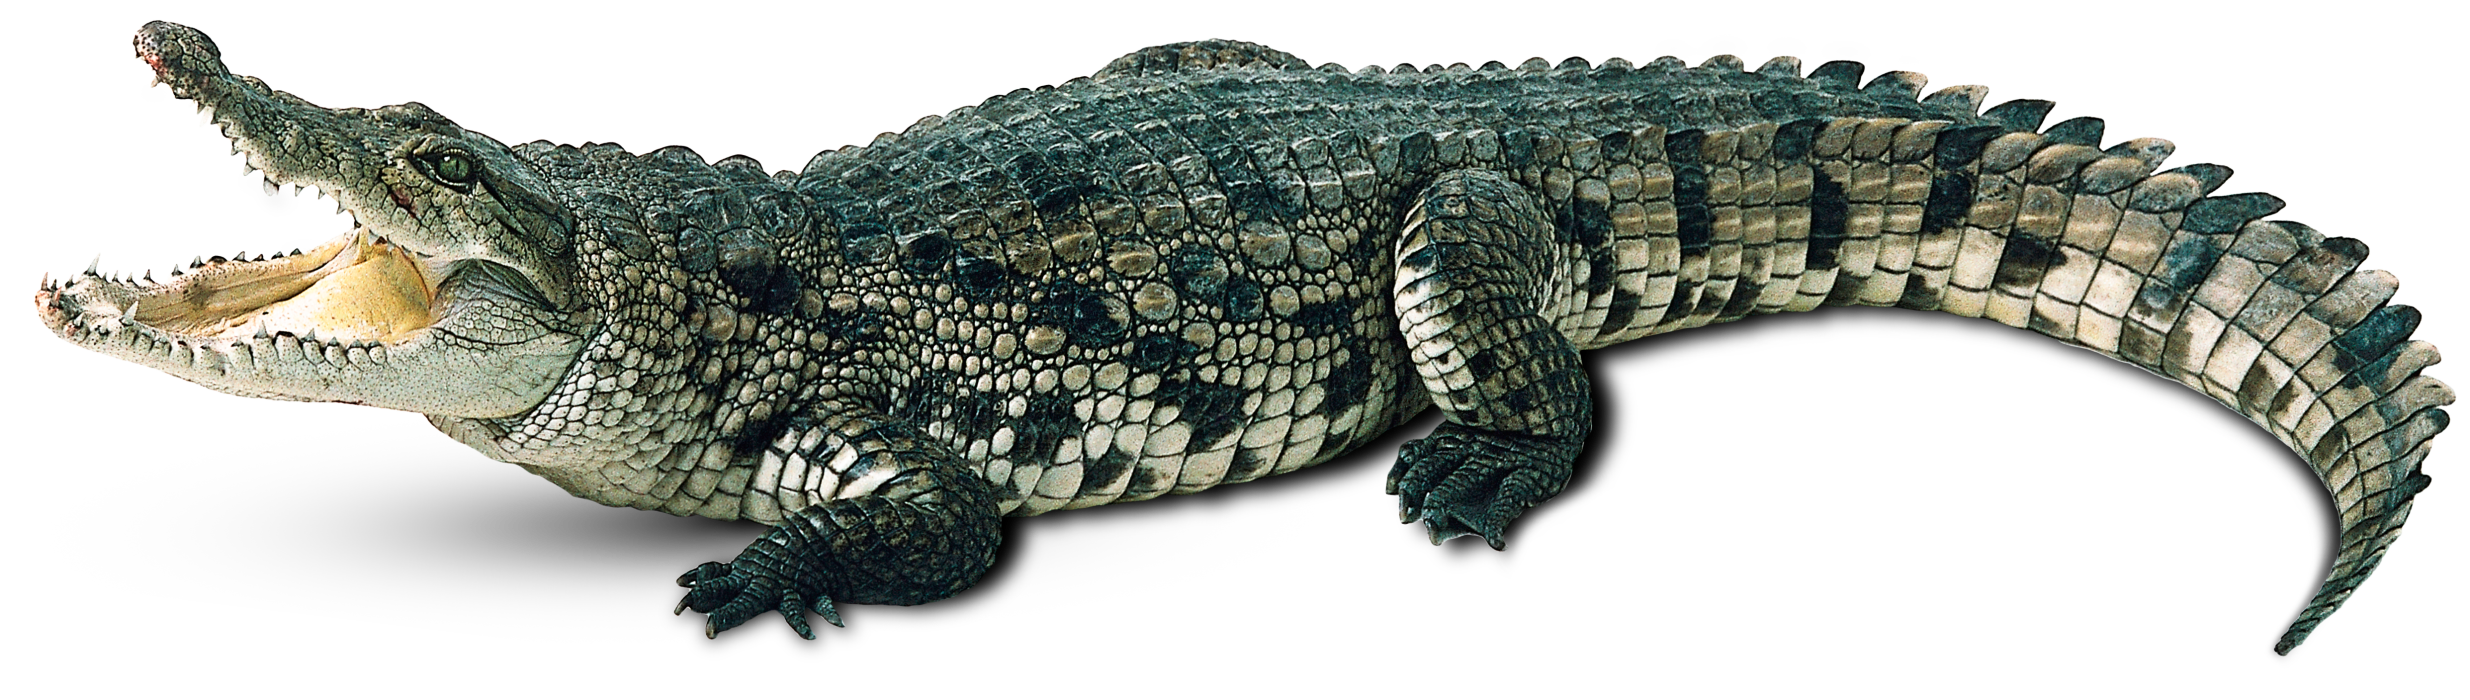 Crocodile Png - Transparent Background Crocodile Clipart Png - HD Wallpaper 